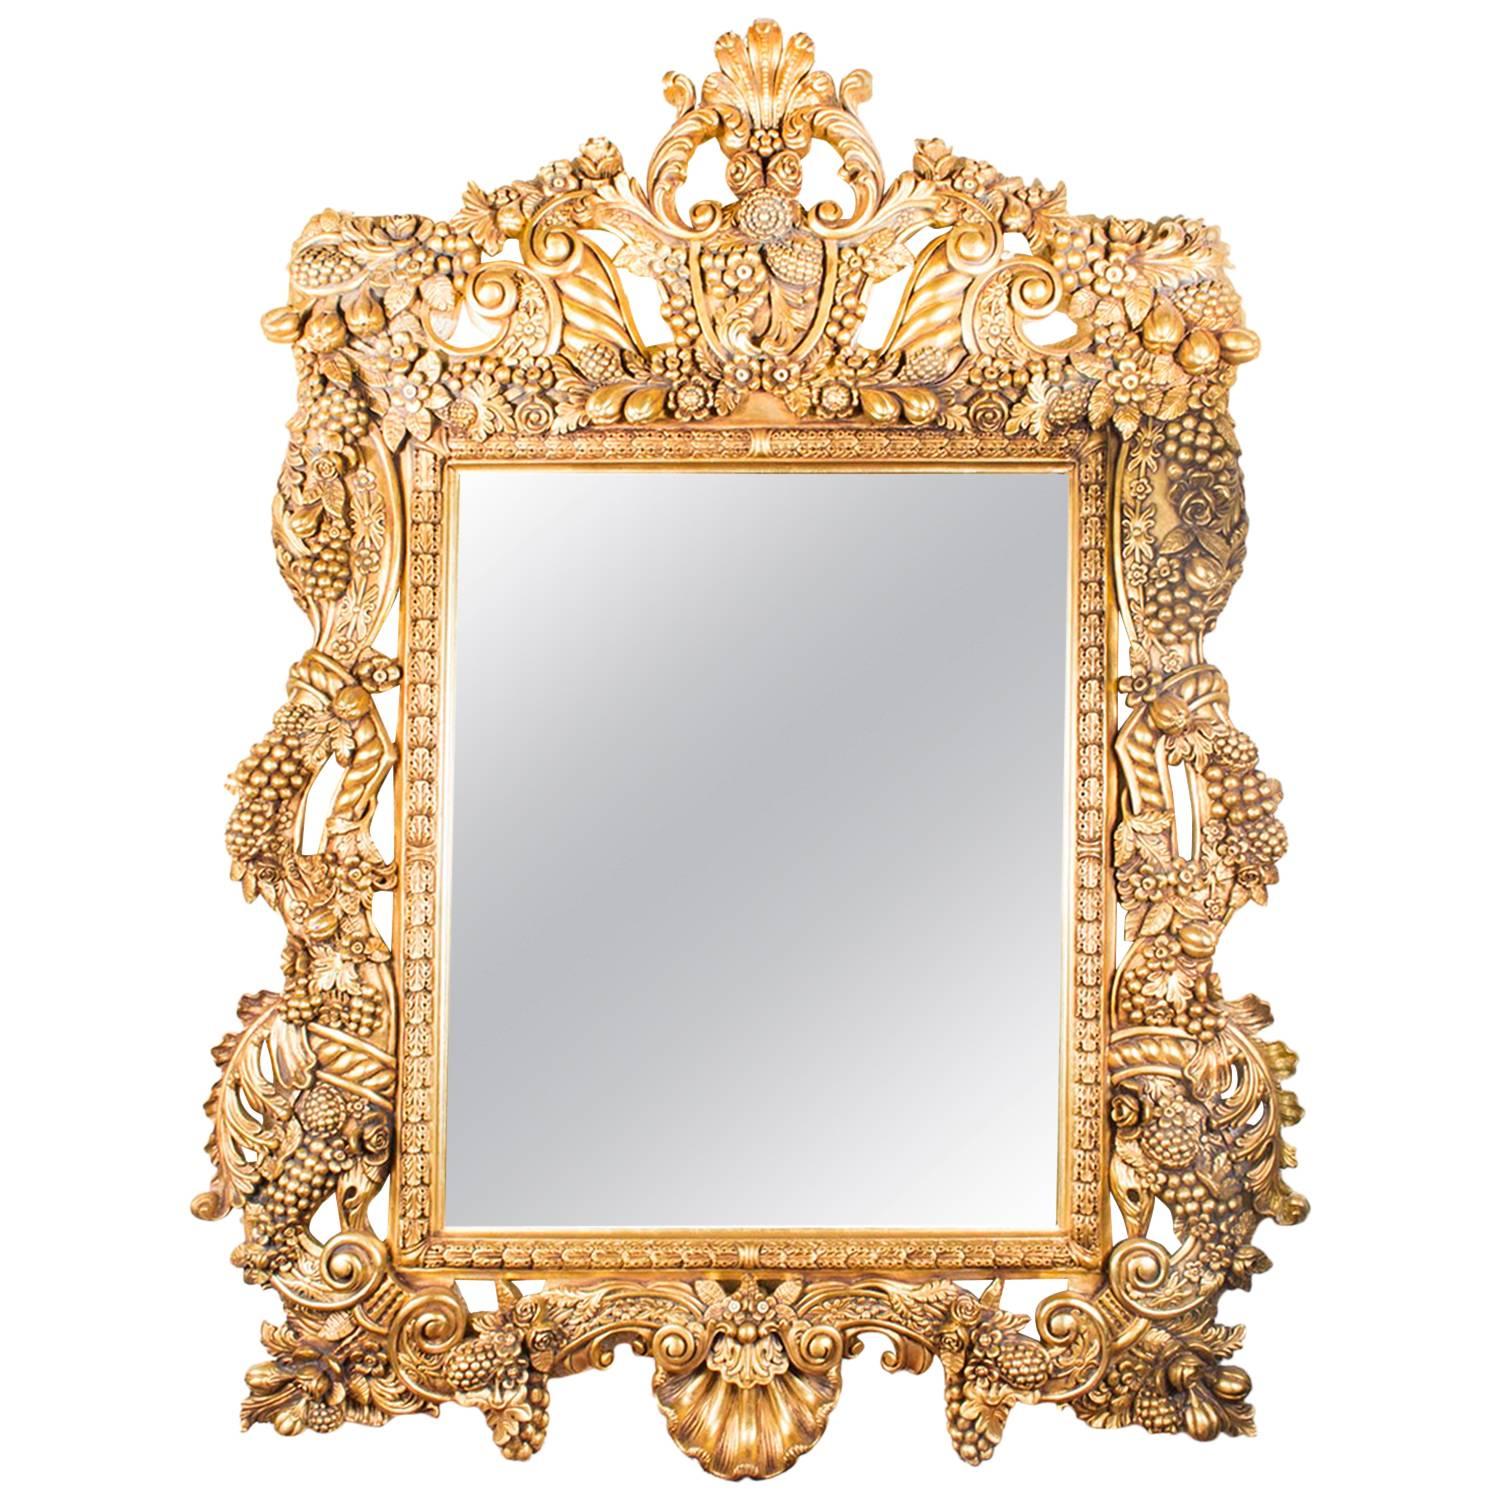 Decorative Ornate Florentine Giltwood Mirror 190 x 150 cm